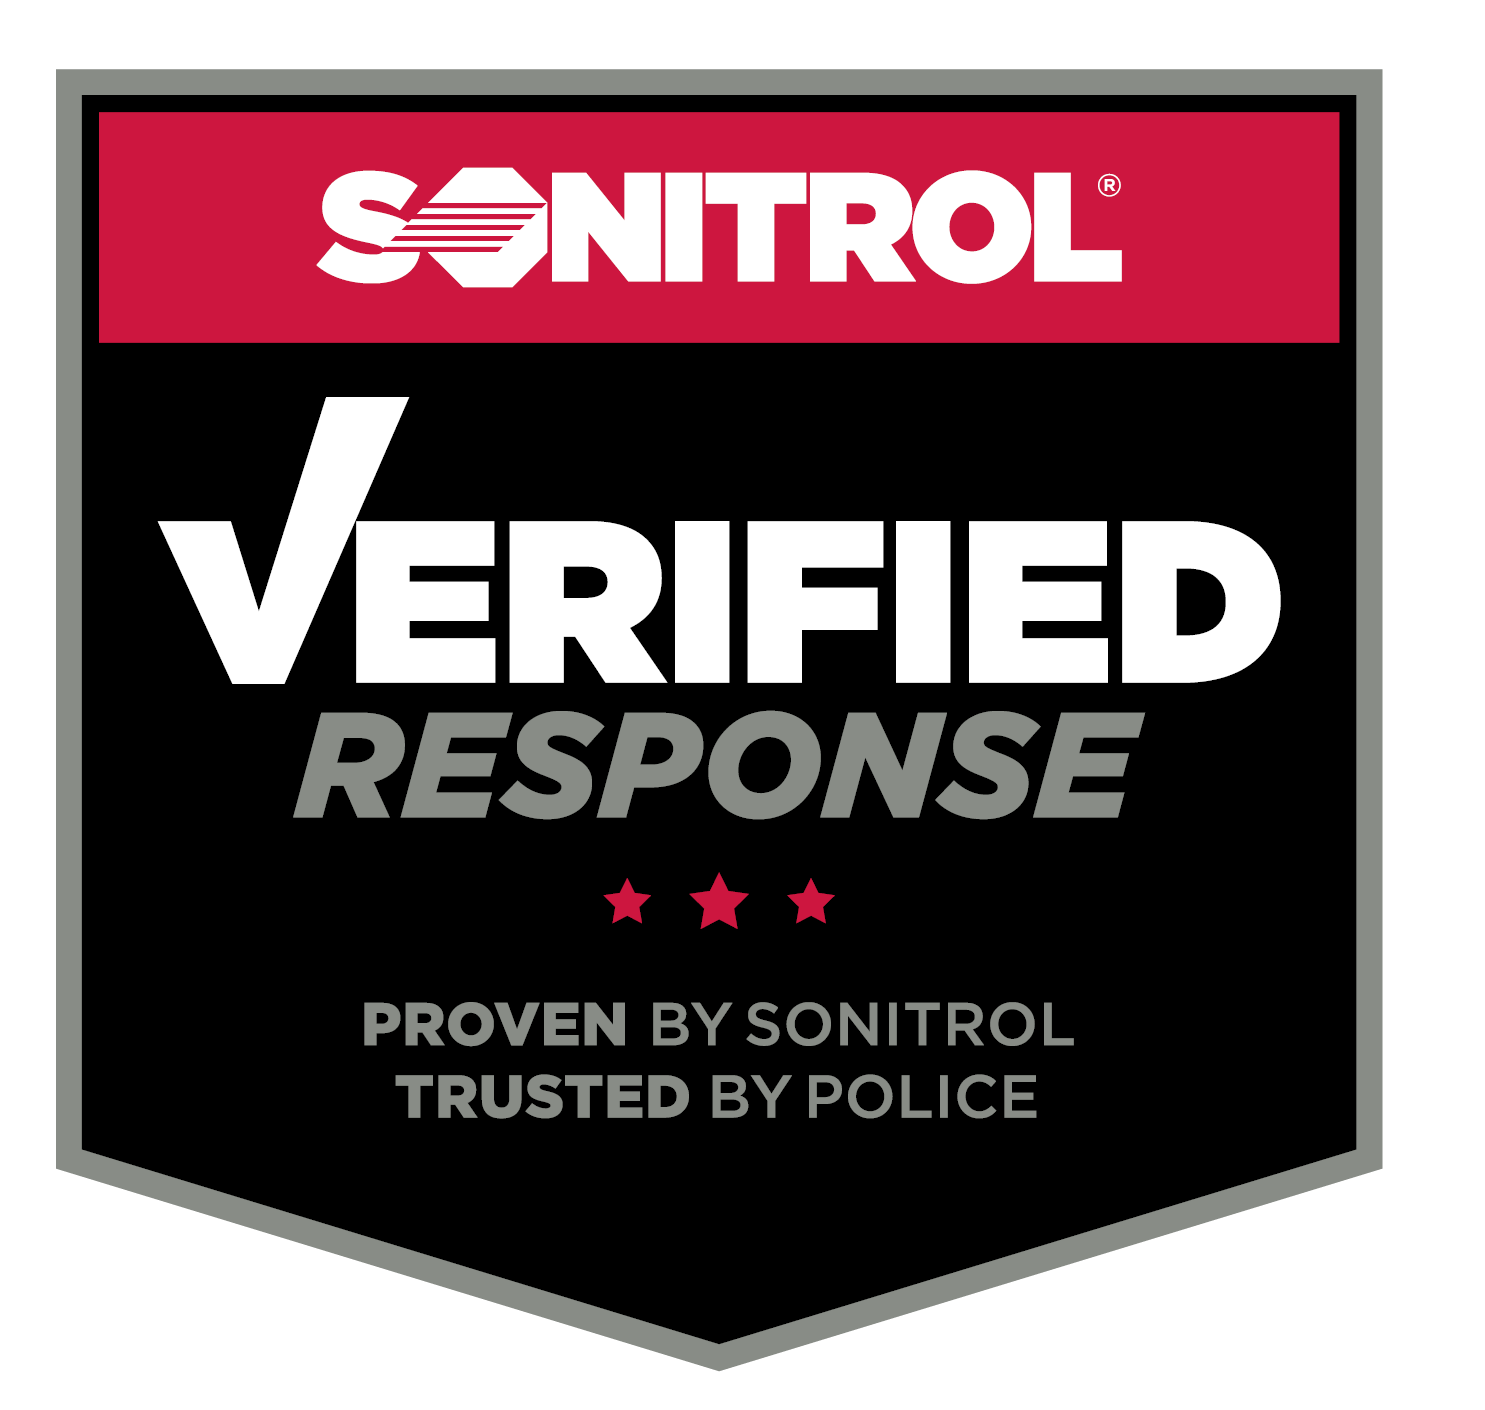 Sonitrol Verified Response badge